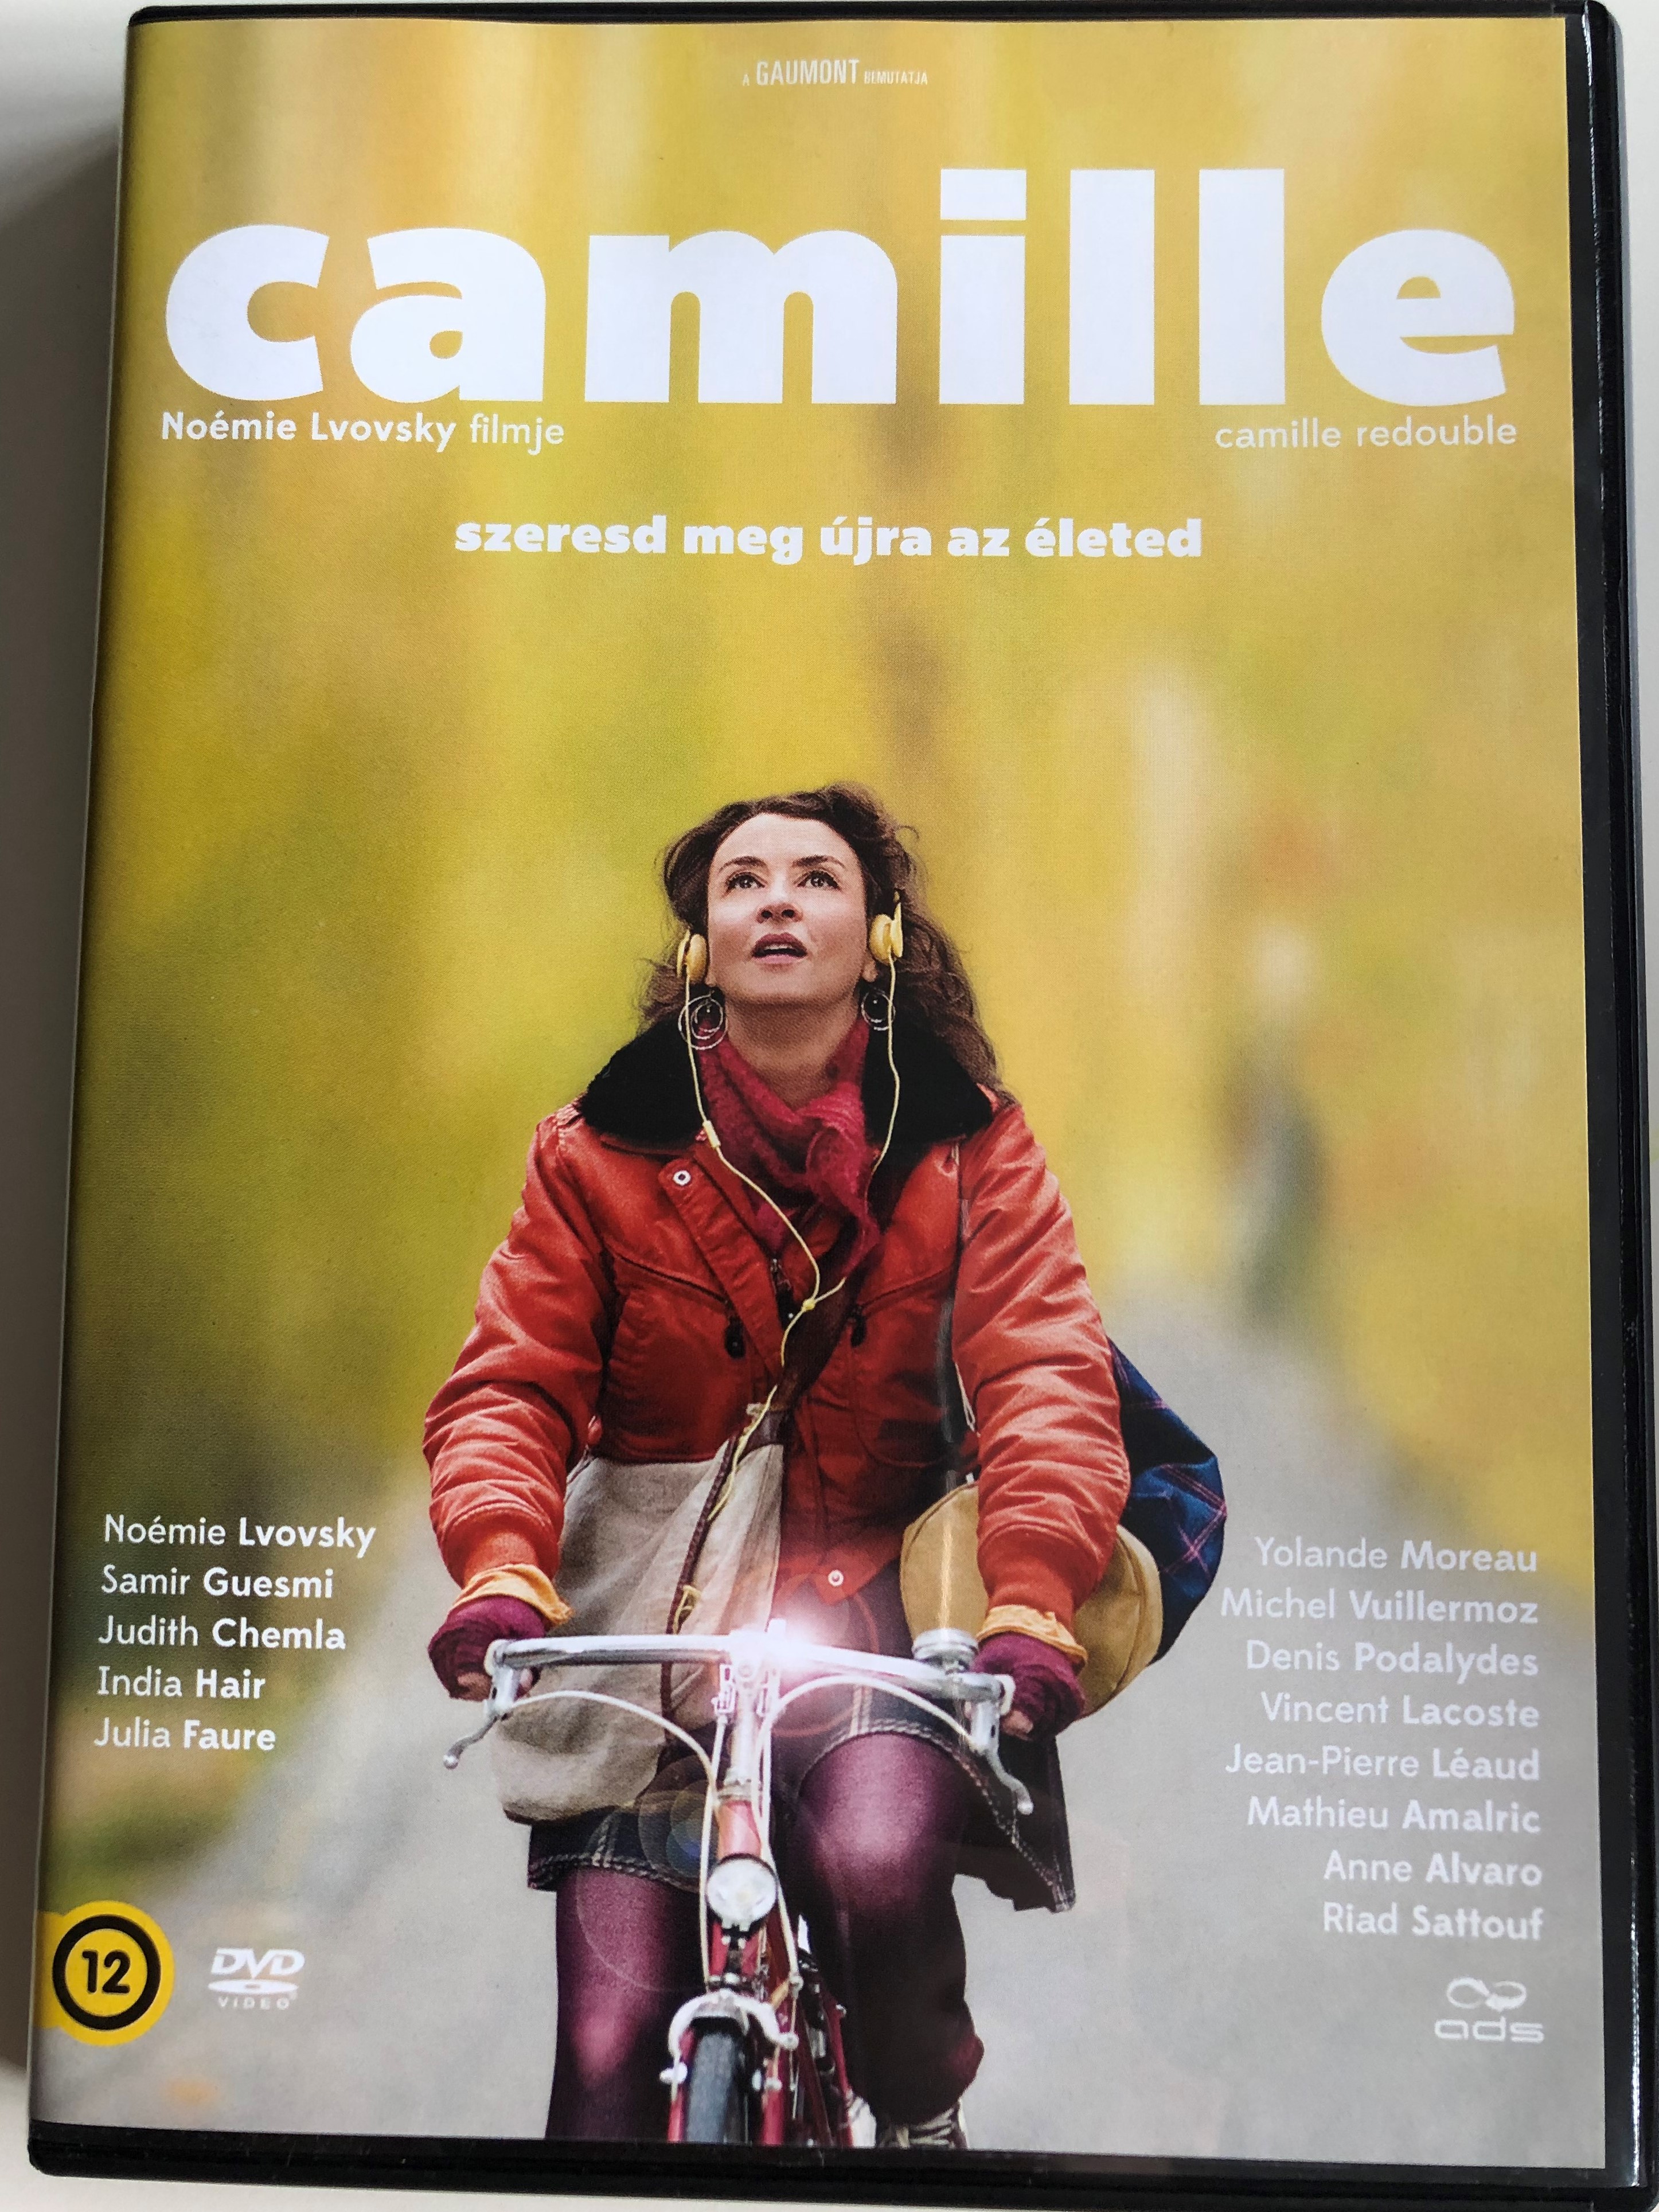 Camille redouble DVD 2012 Camille (Camille Rewinds) / Directed by Noémie  Lvovsky / Starring: Noémie Lvovsky, Yolande Moreau - bibleinmylanguage